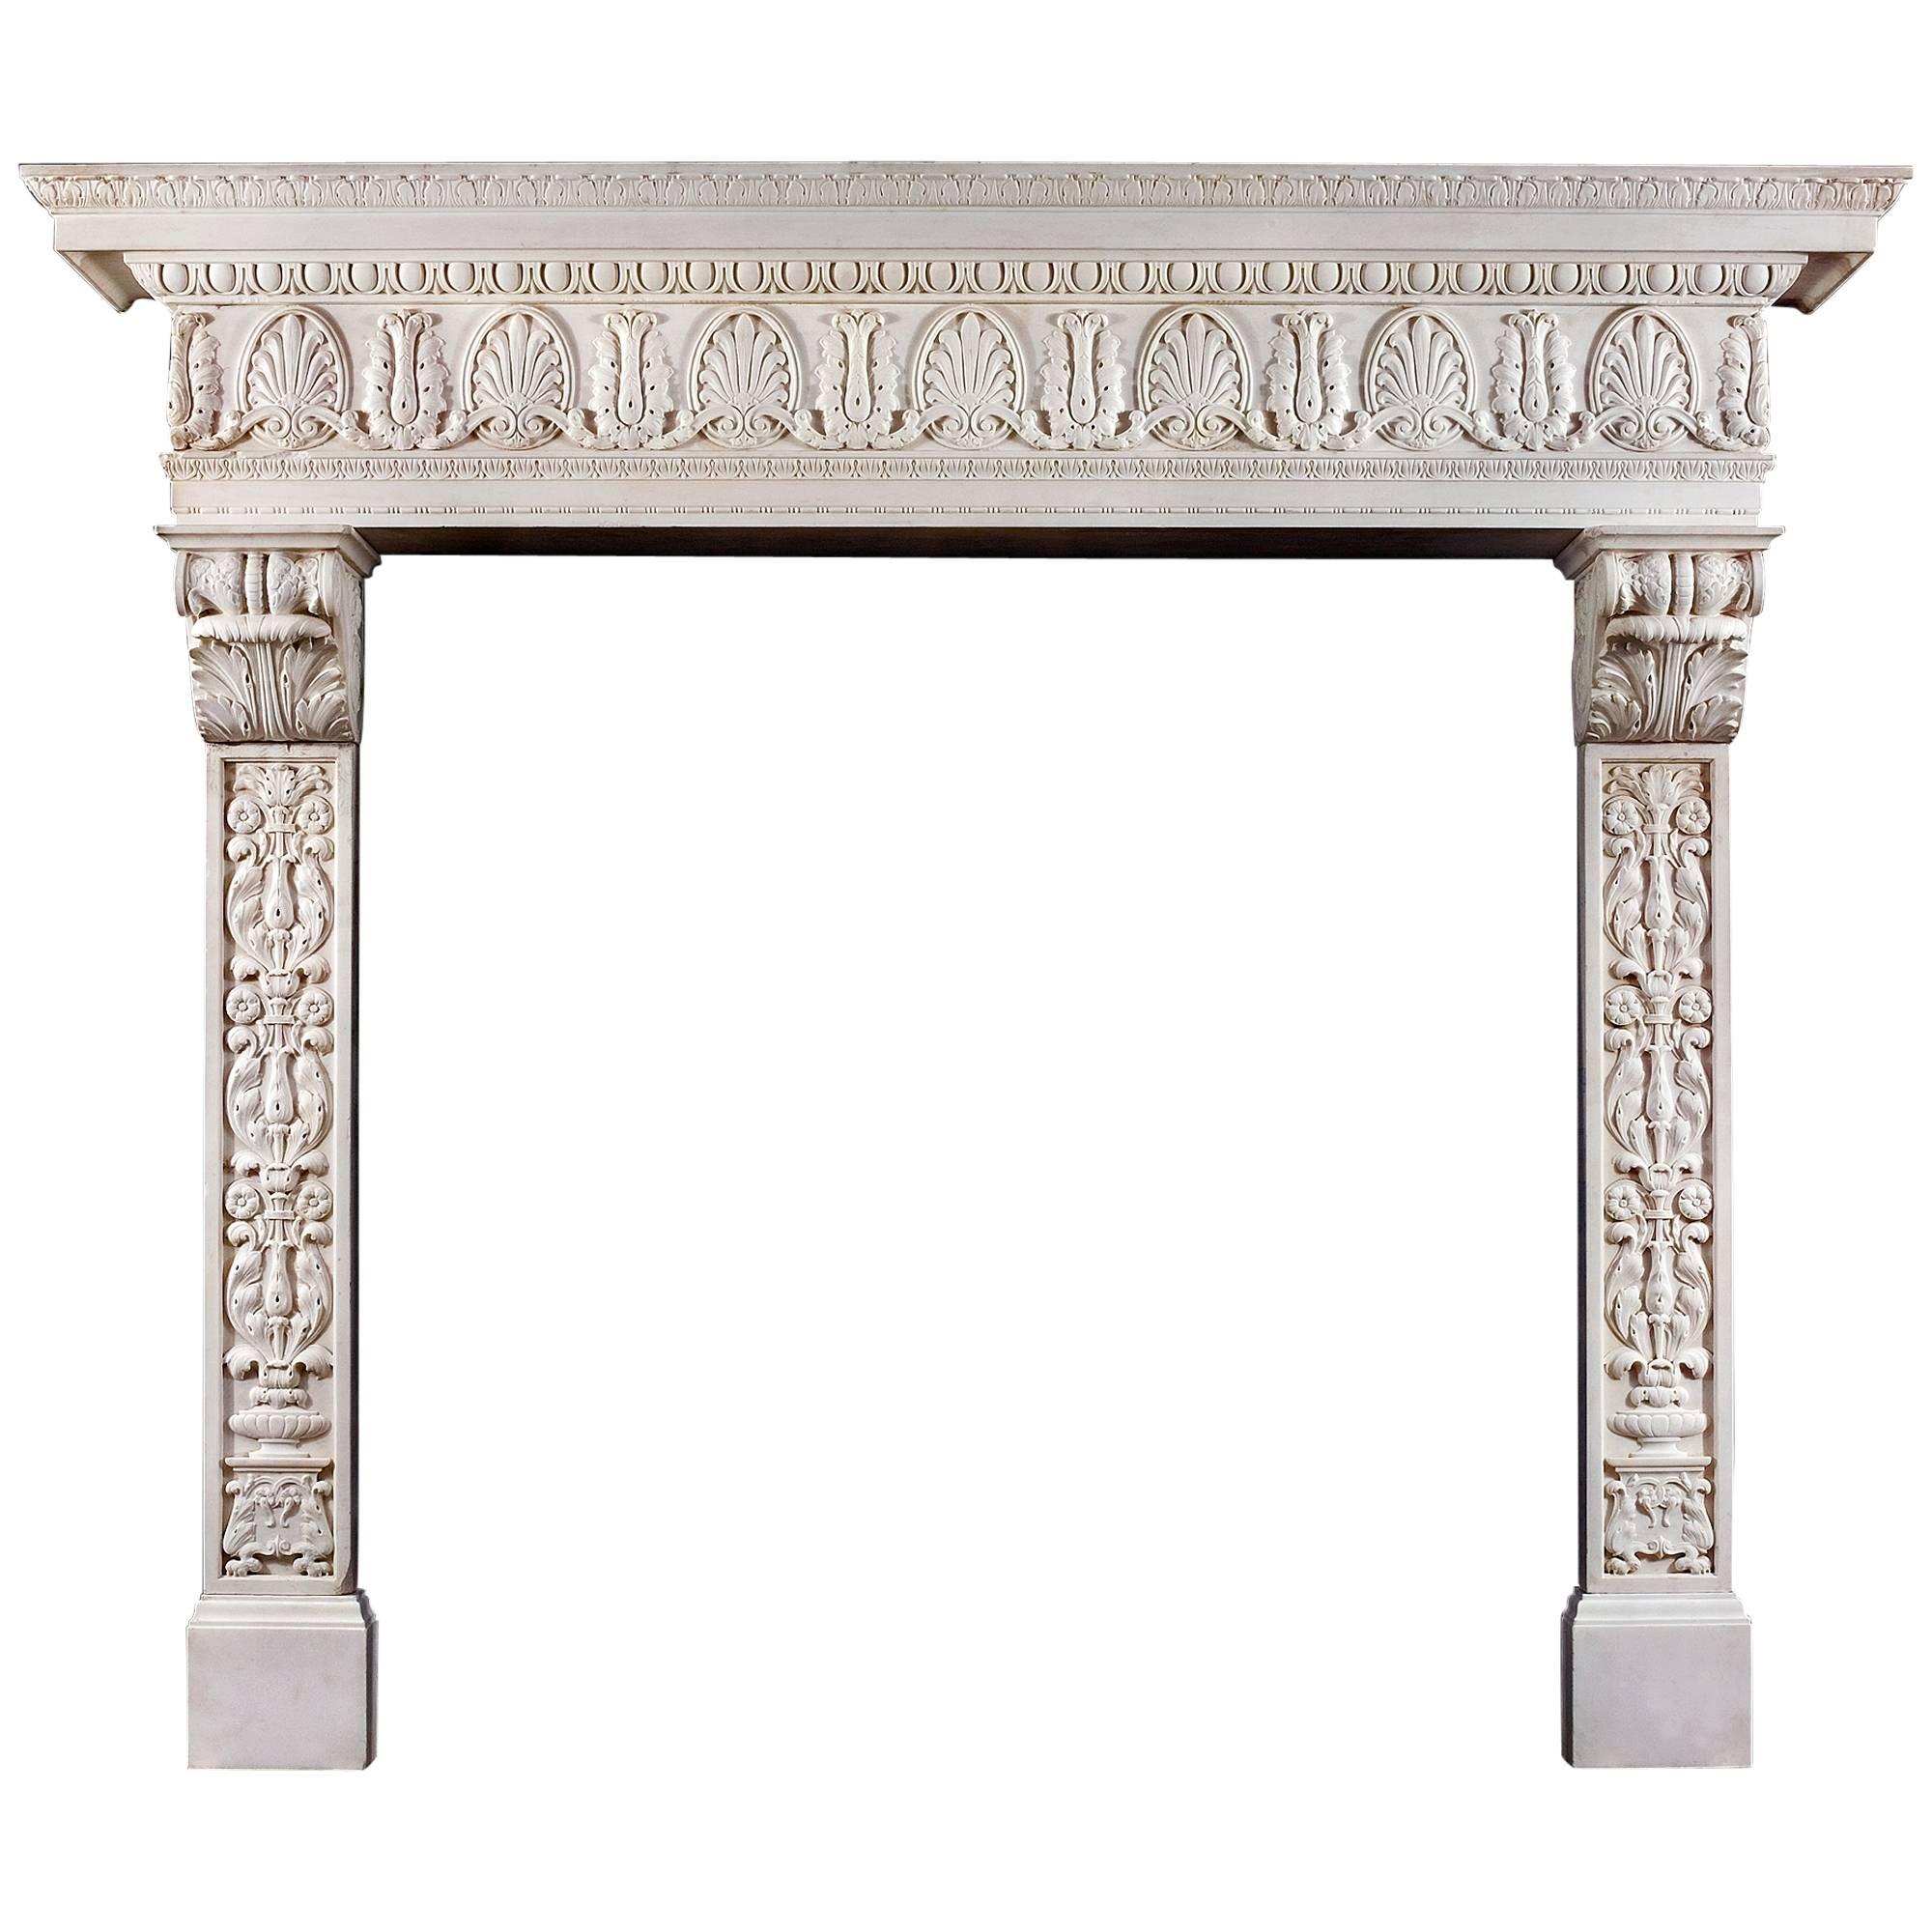 Grand Statuary Marble Antique Italian Renaissance Style Fireplace Mantel